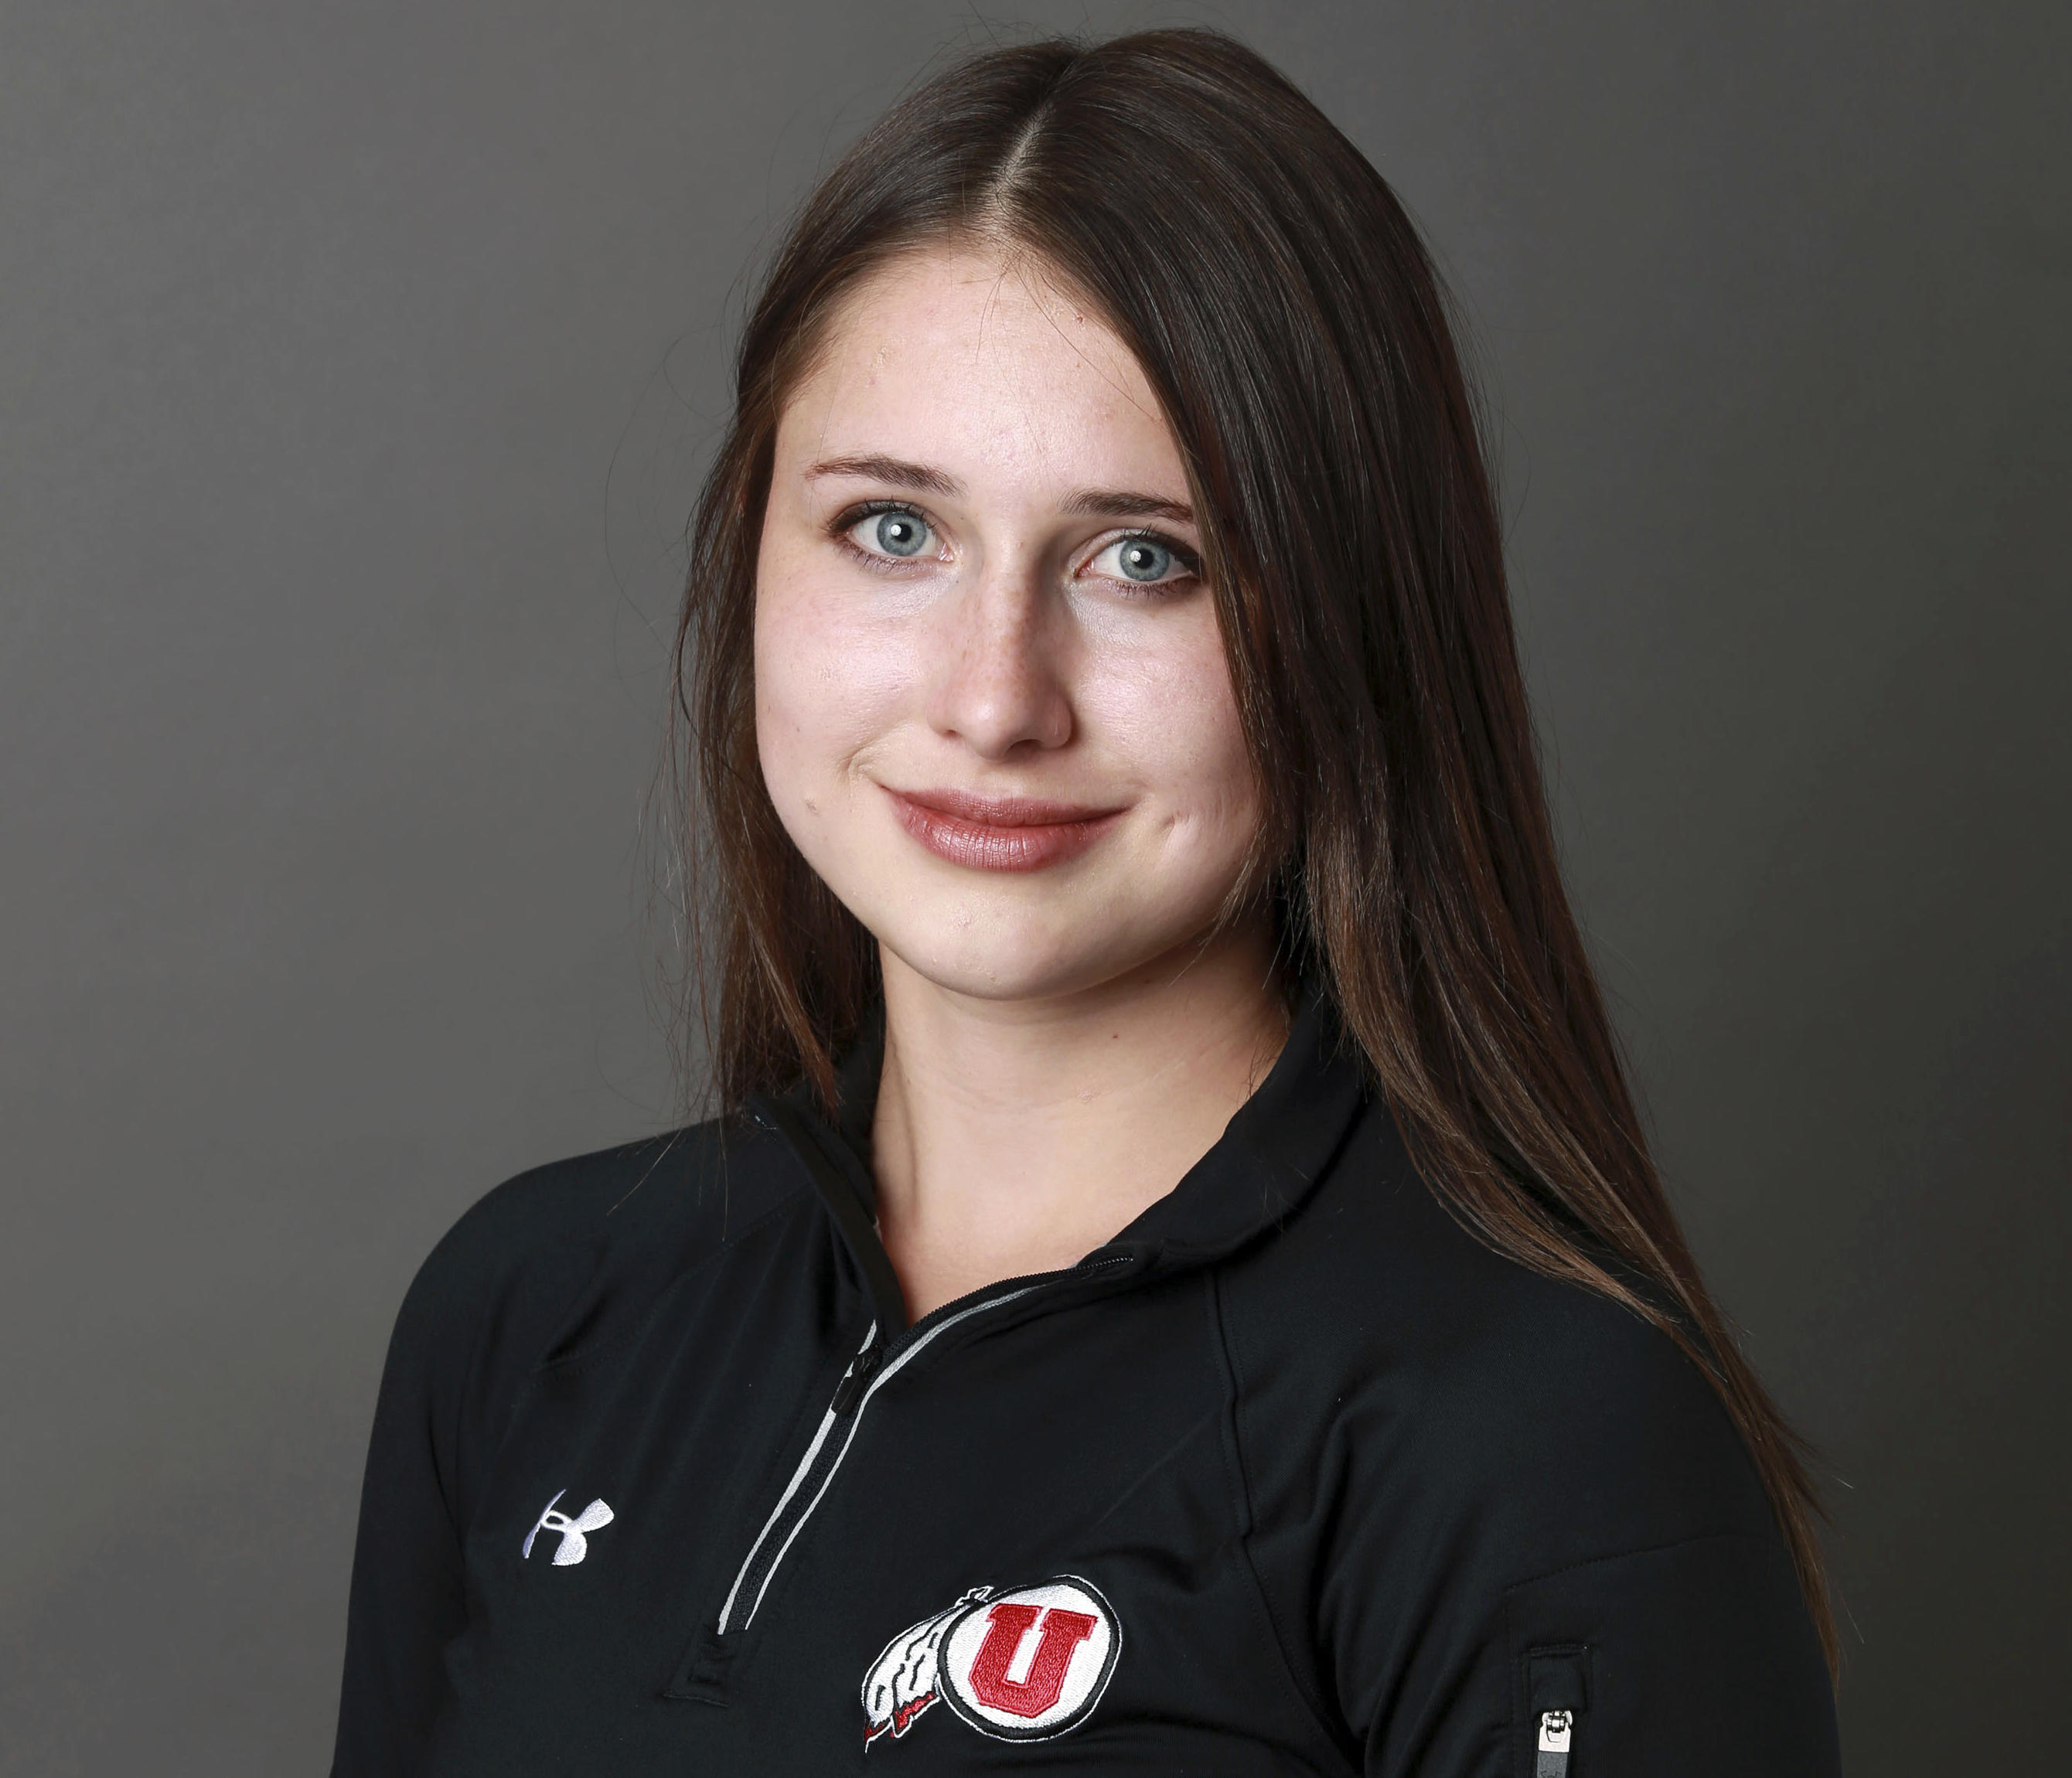 University of Utah shooting: Student Lauren McCluskey 